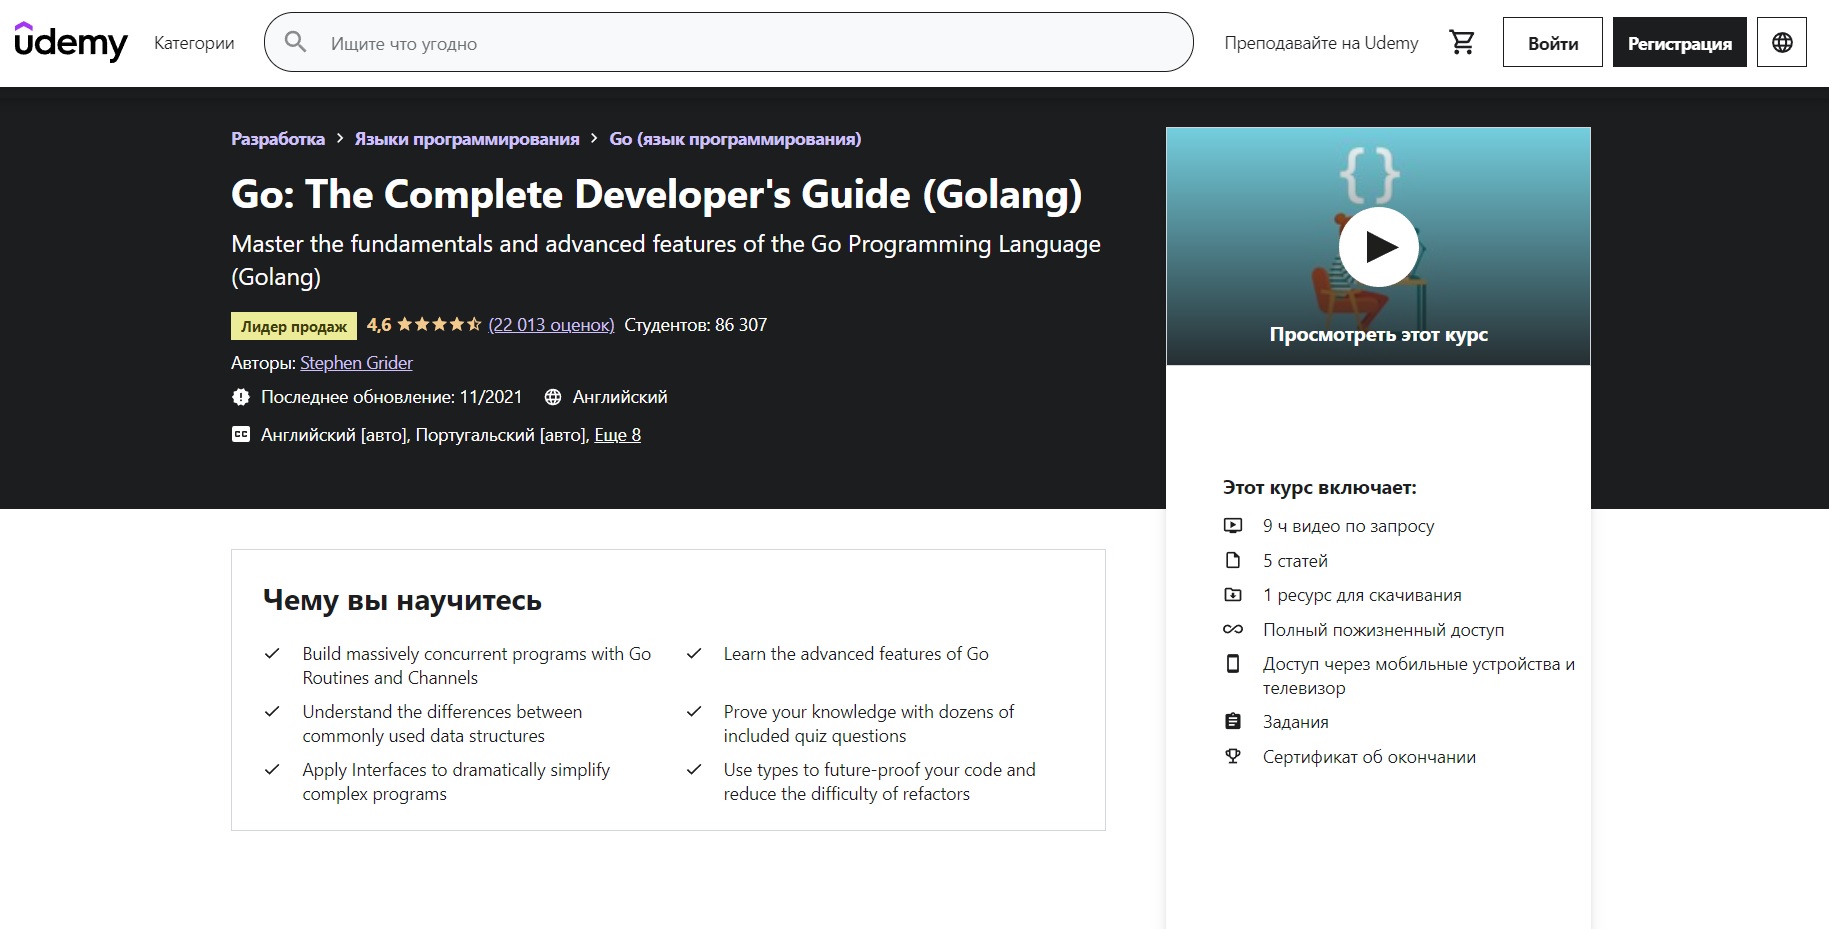 Go — The Complete Developer’s Guide (Golang)